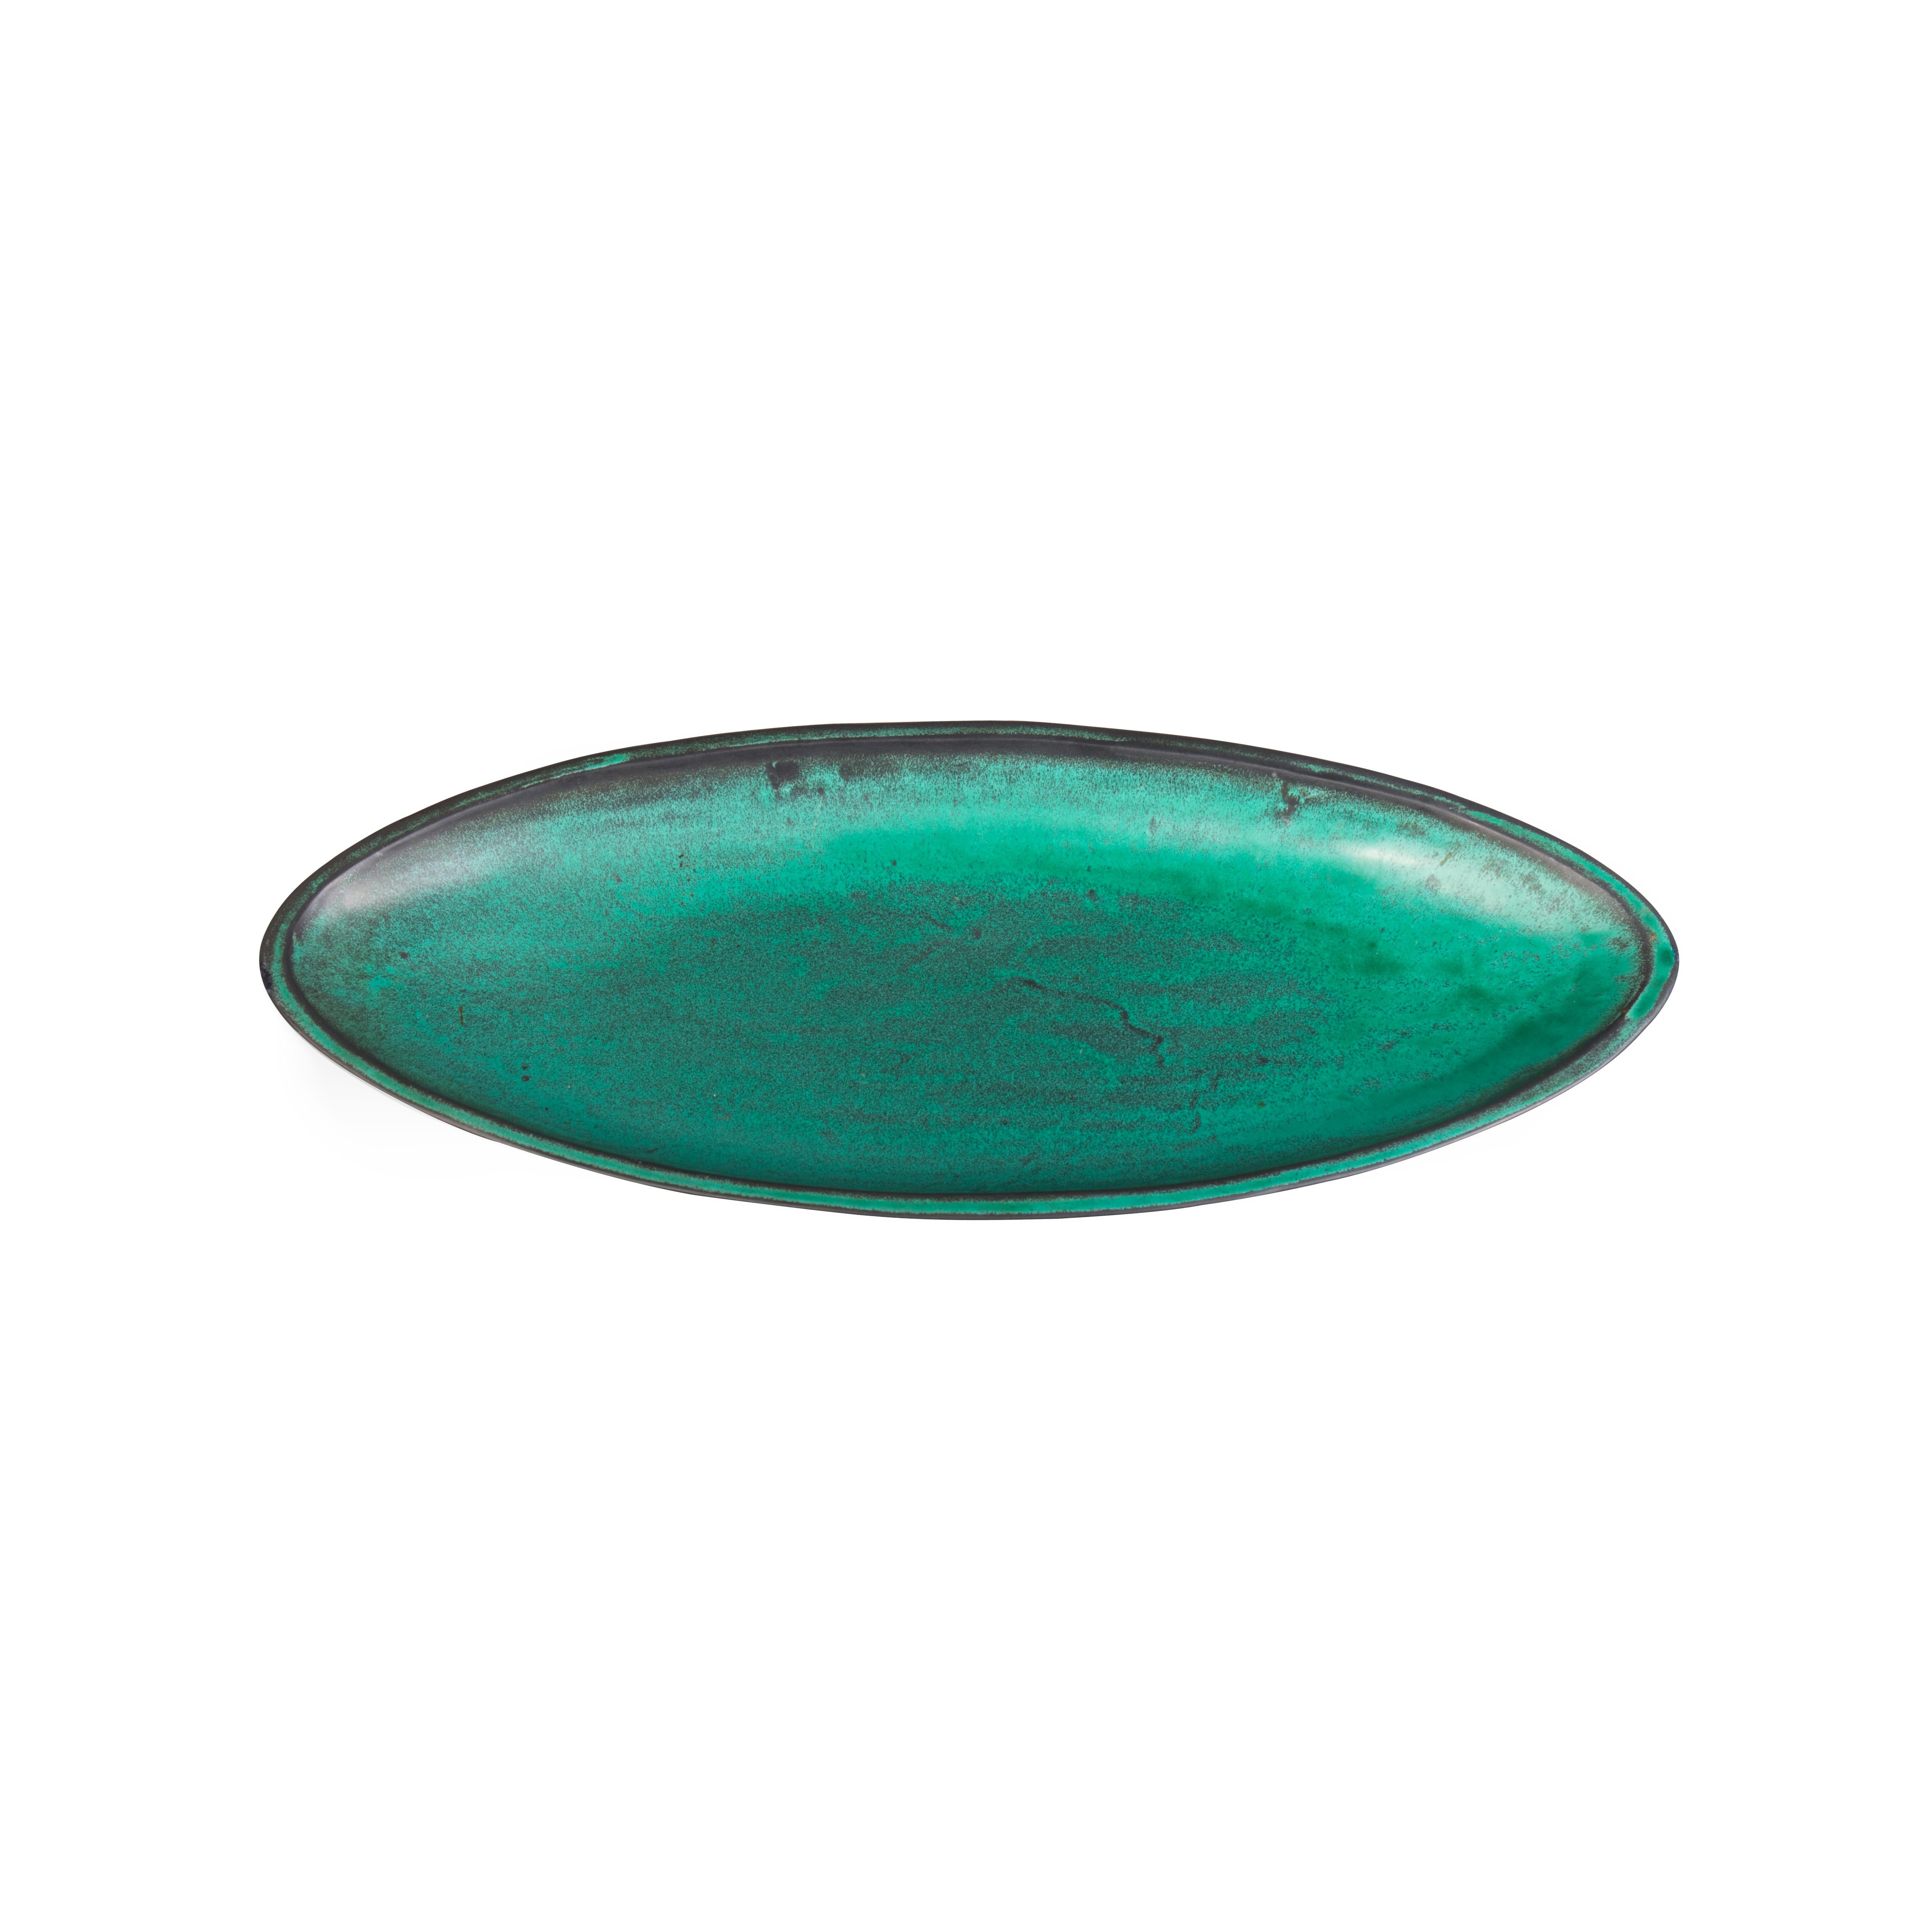 Scandinavian Modern Danish black and turquoise green elliptical shaped dish plate For Sale